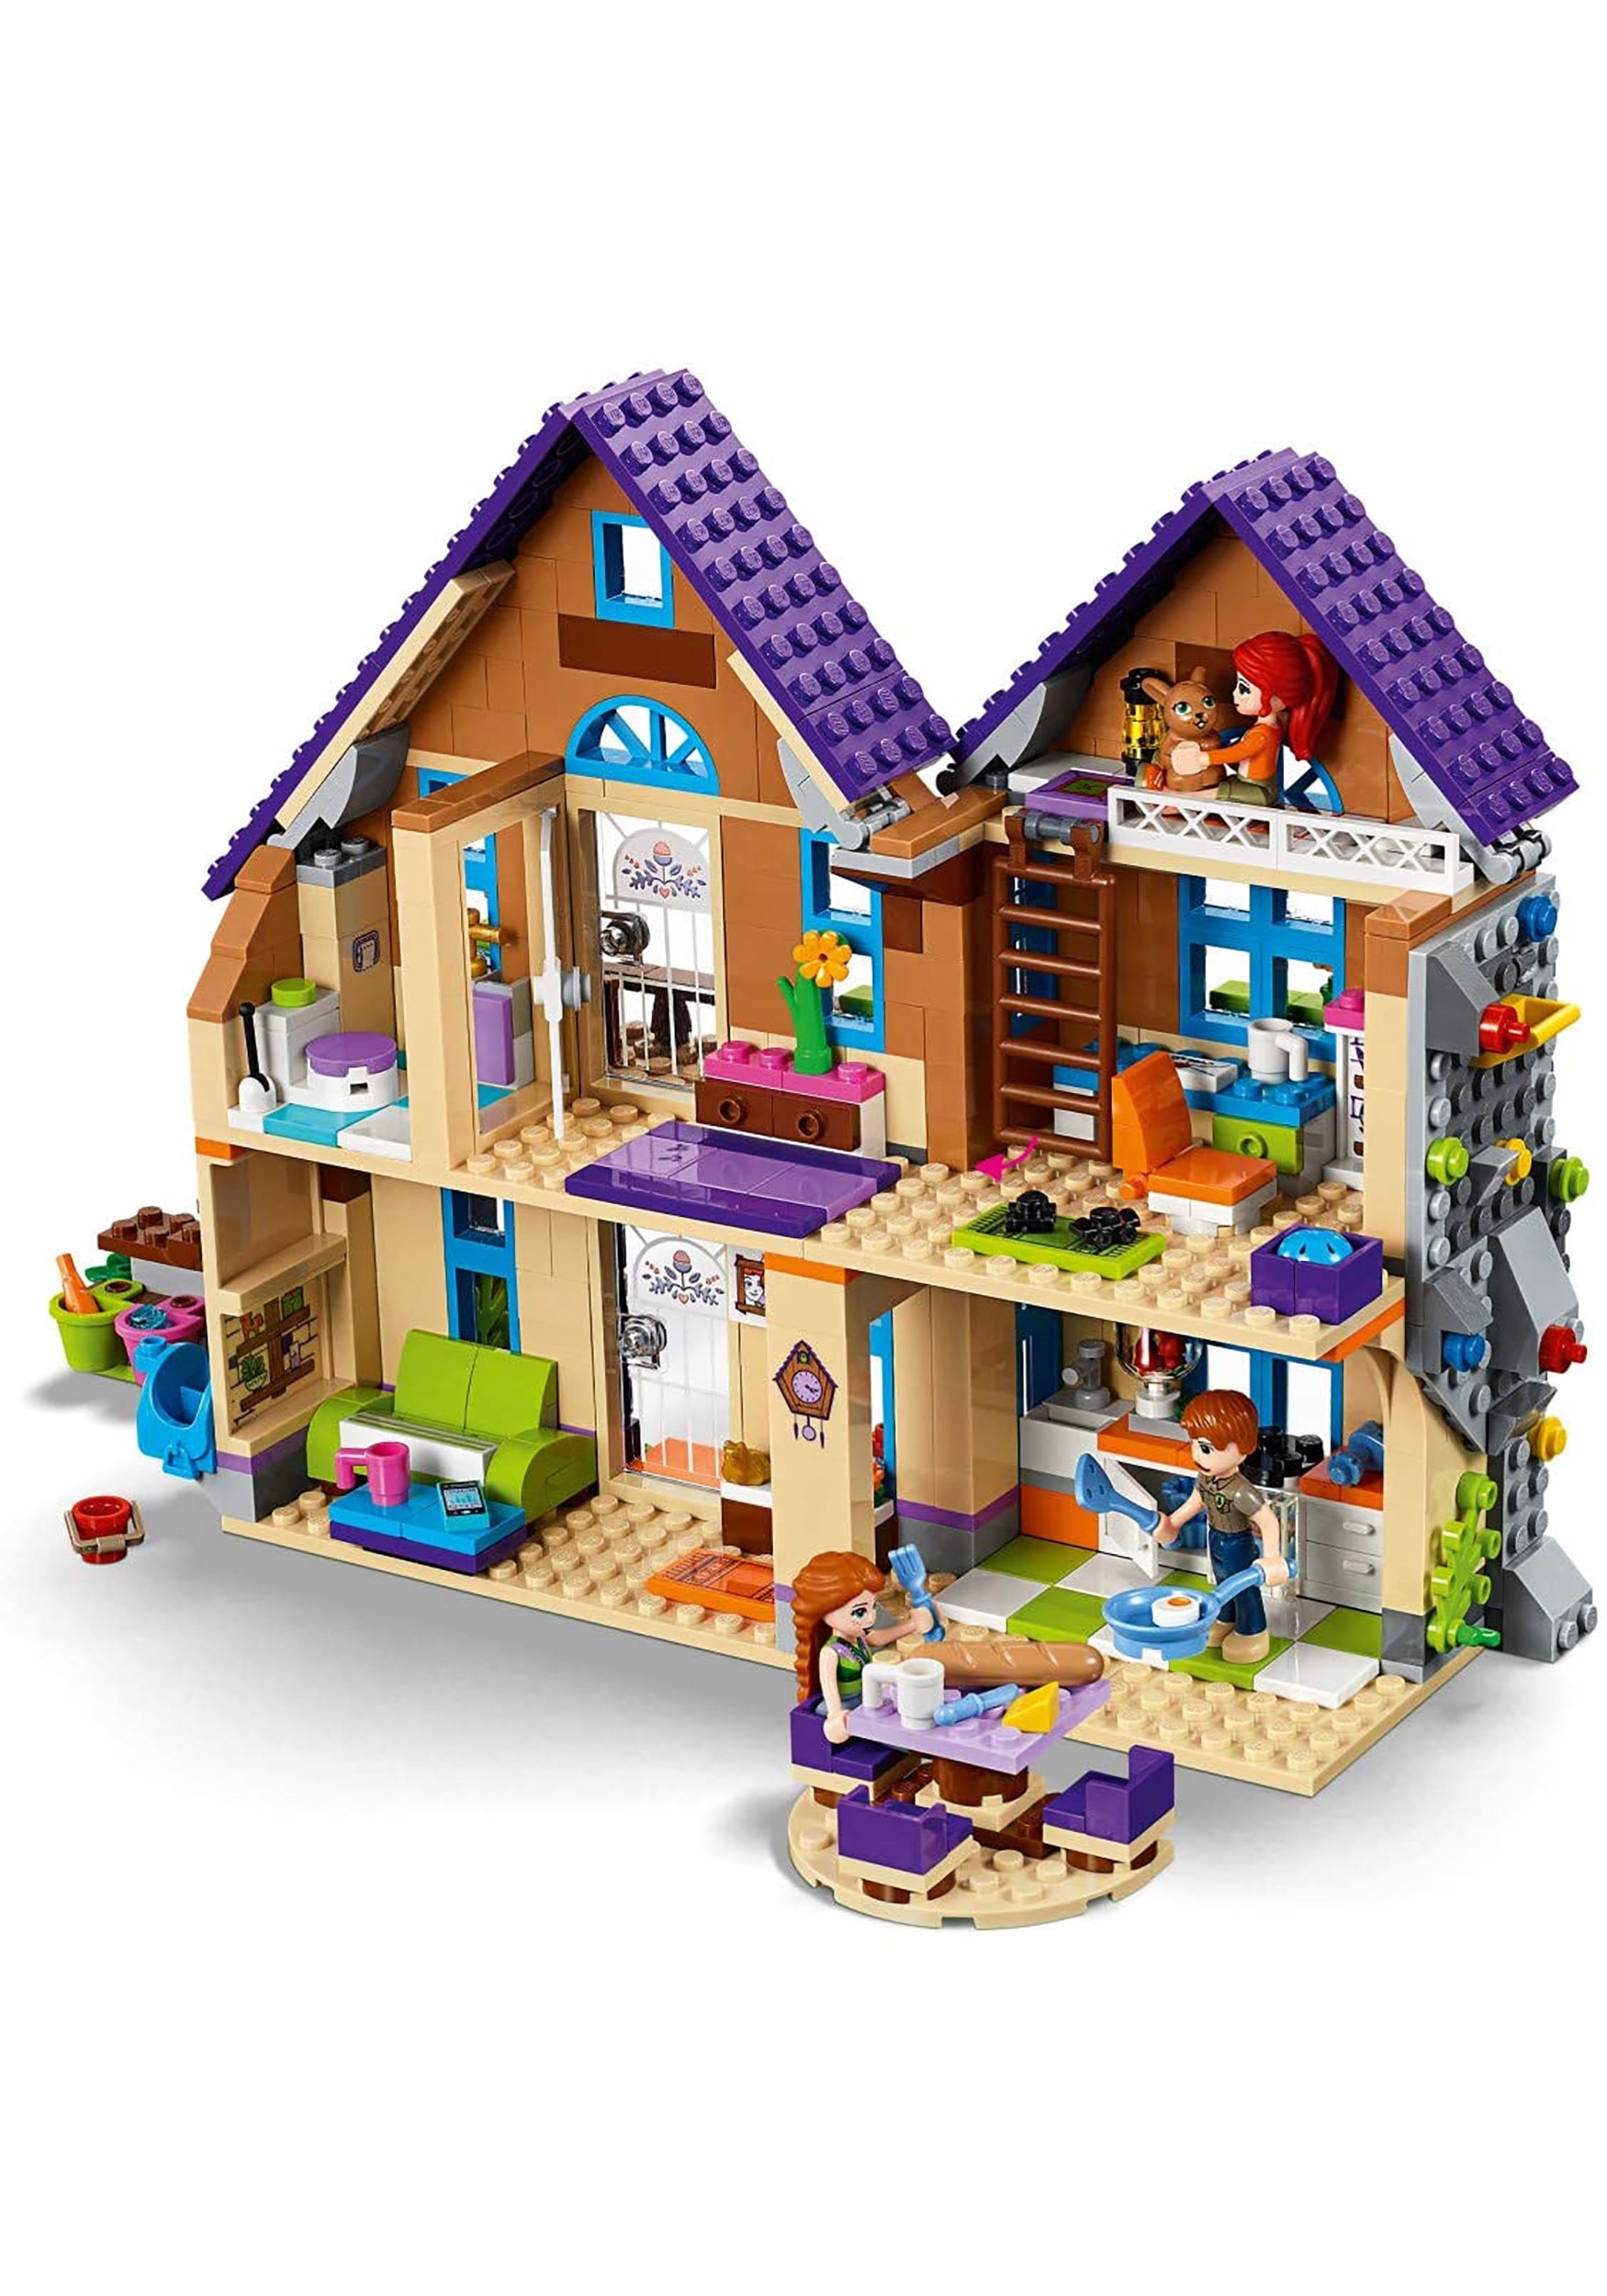 lego friends house sets